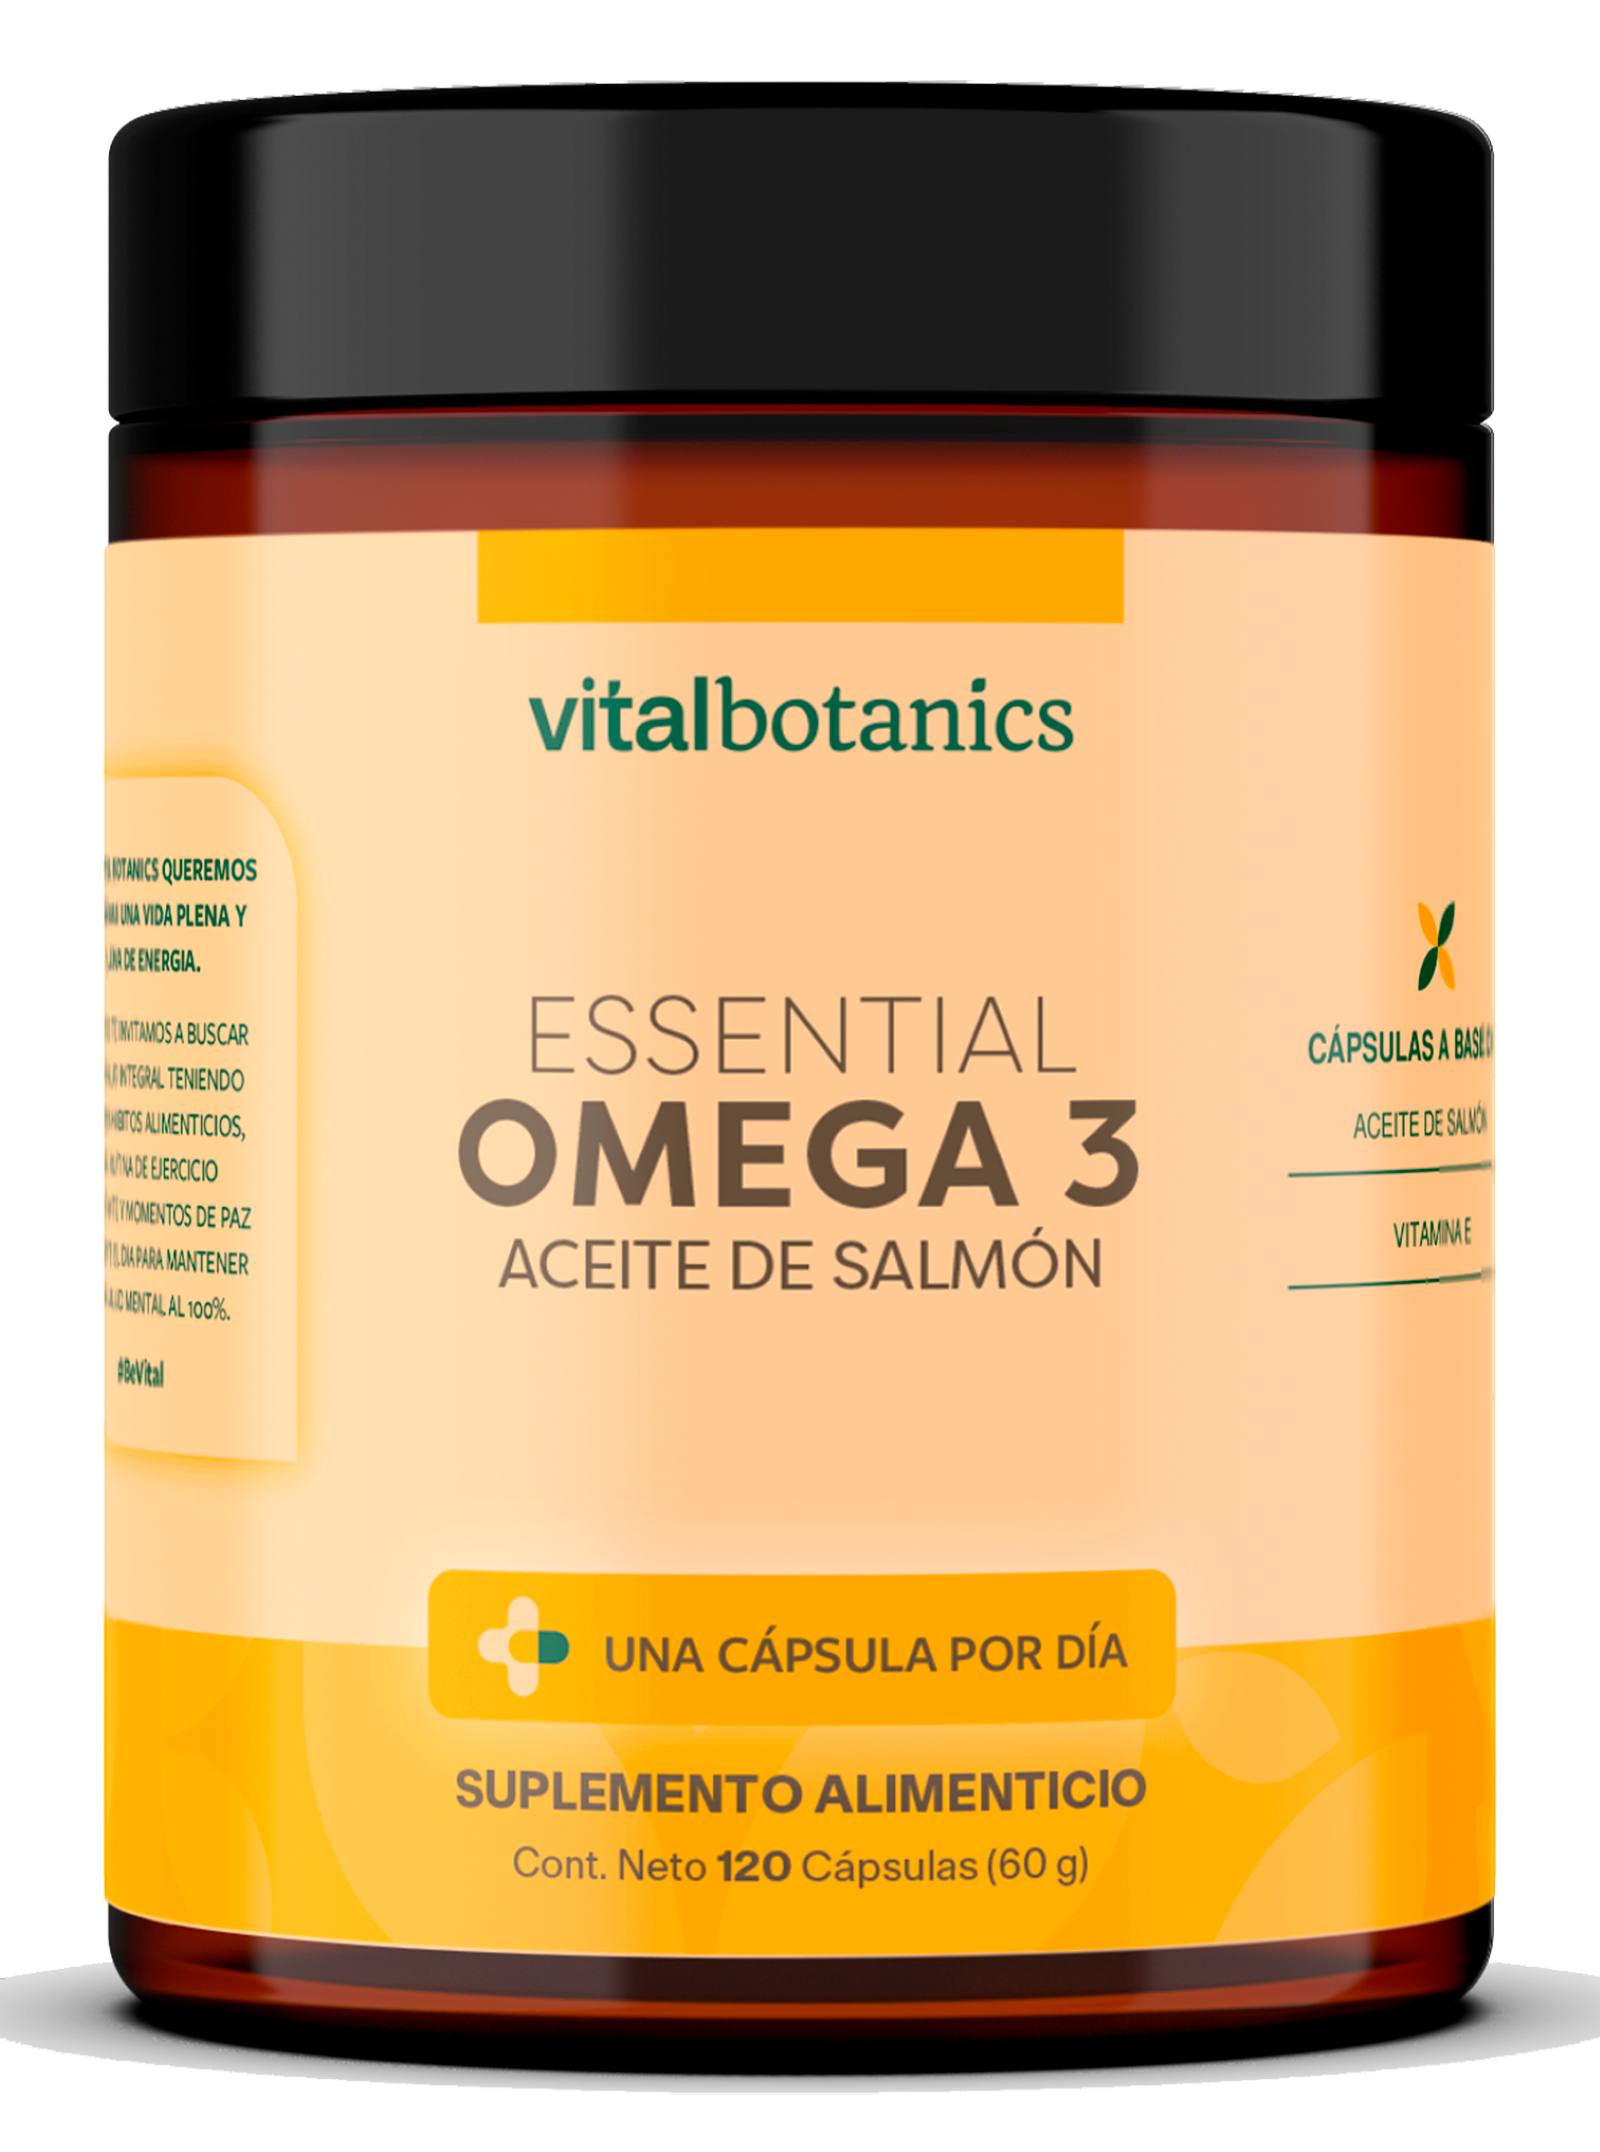 ESSENTIAL OMEGA 3 | Aceite Puro de Salmón, Omega 3 y Vitamina E